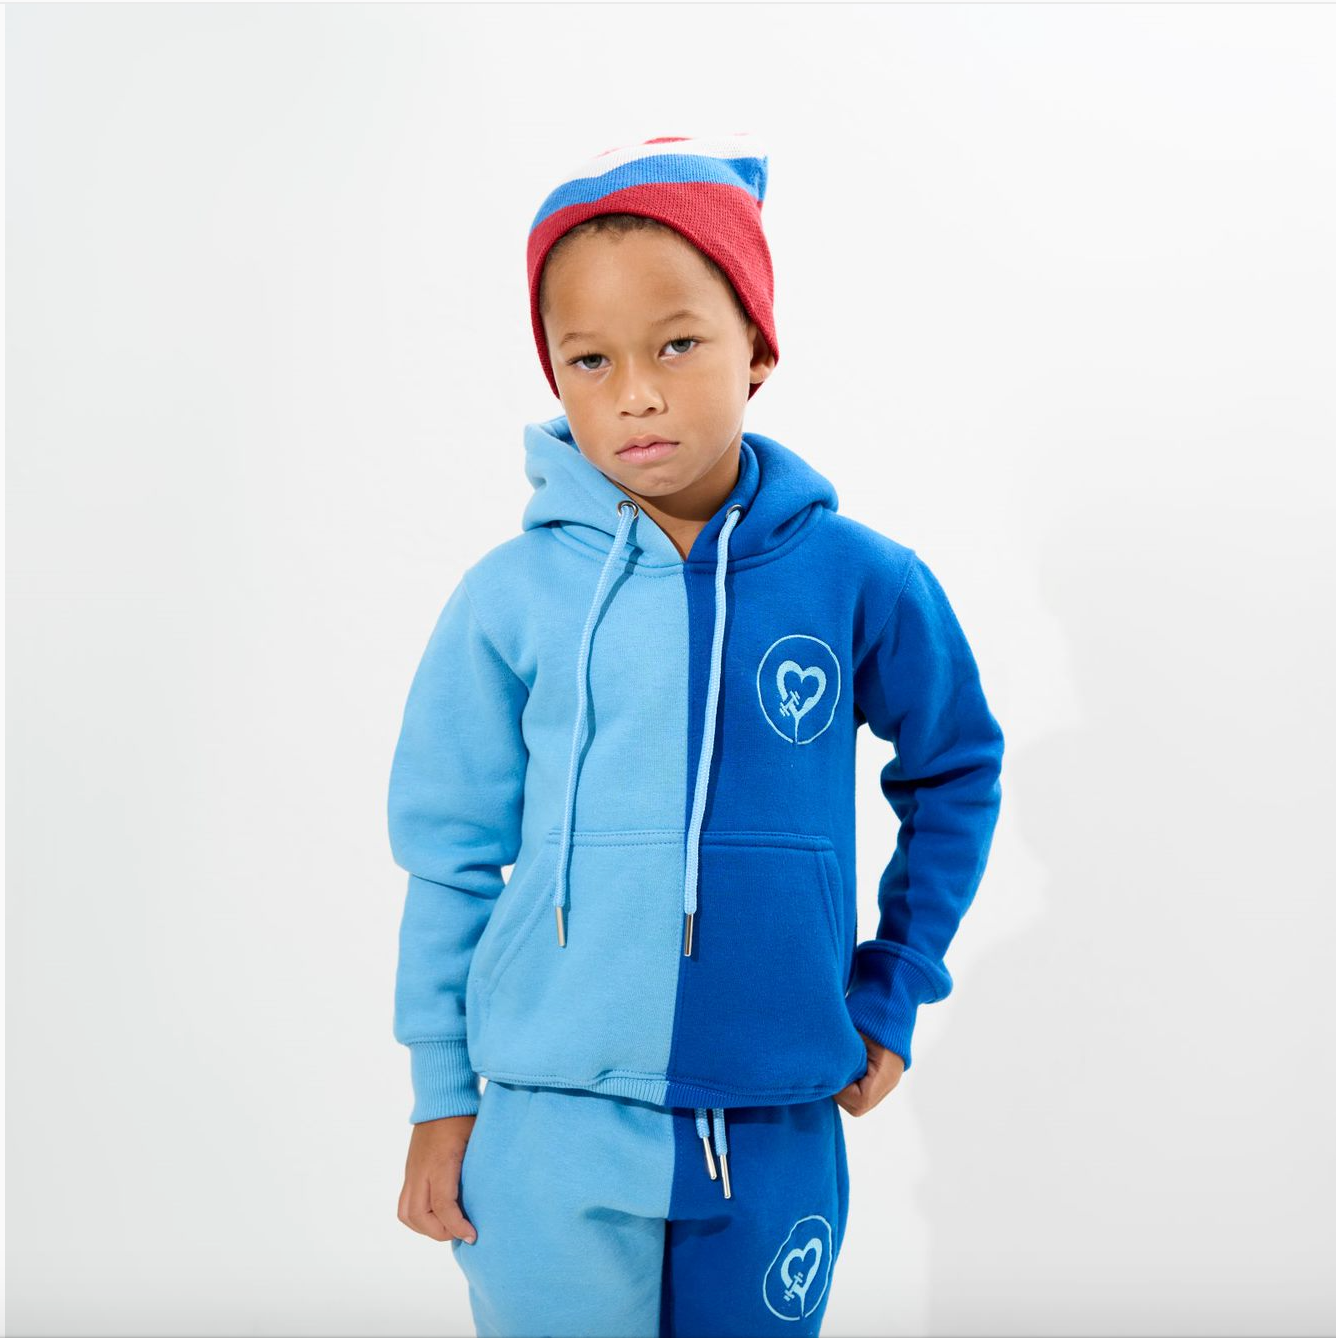 Blue So Shadey Sweatsuit Toddler (Preorder) - Uptimum Bodied Online